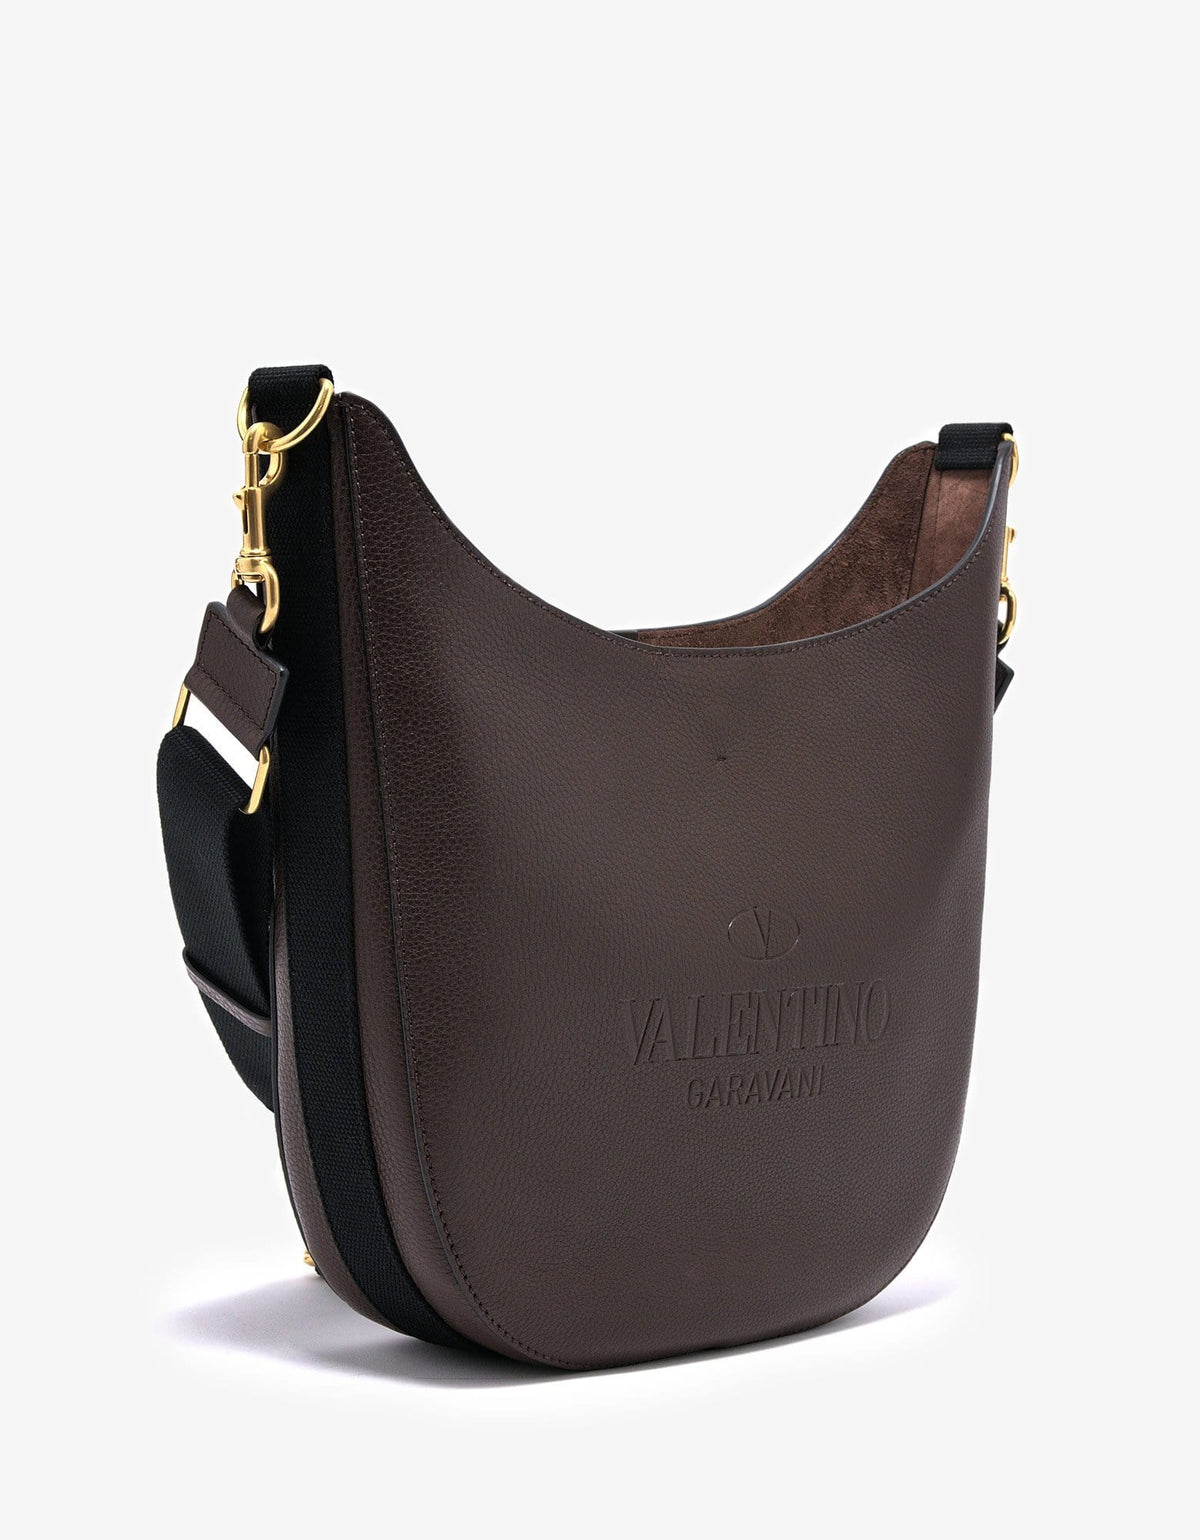 Valentino Garavani Brown Identity Leather Hobo Bag